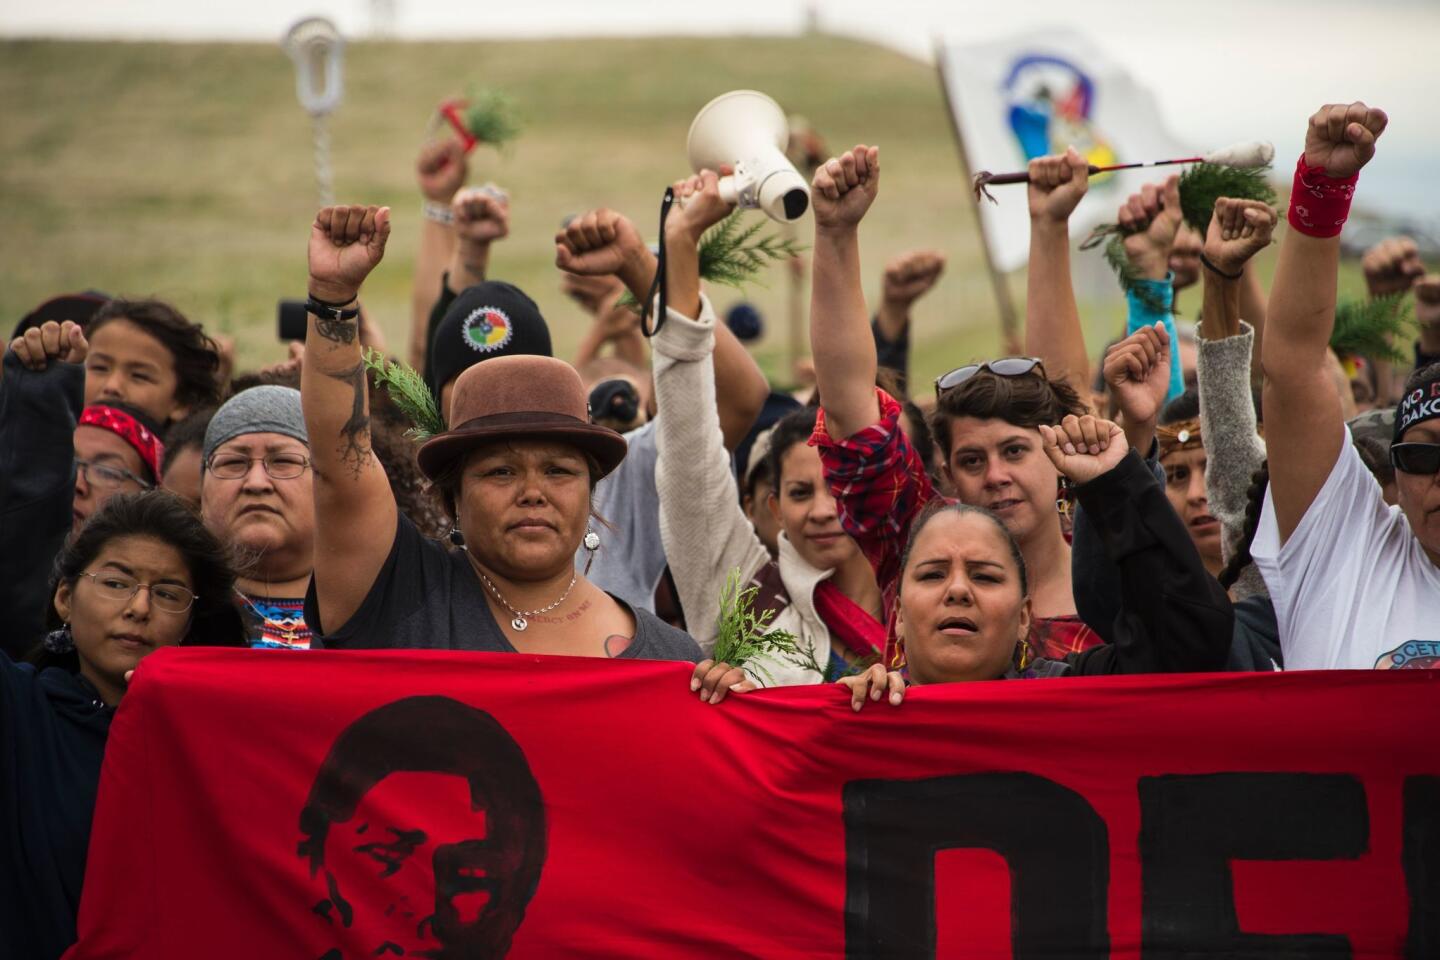 Protests against the Dakota Access oil pipeline